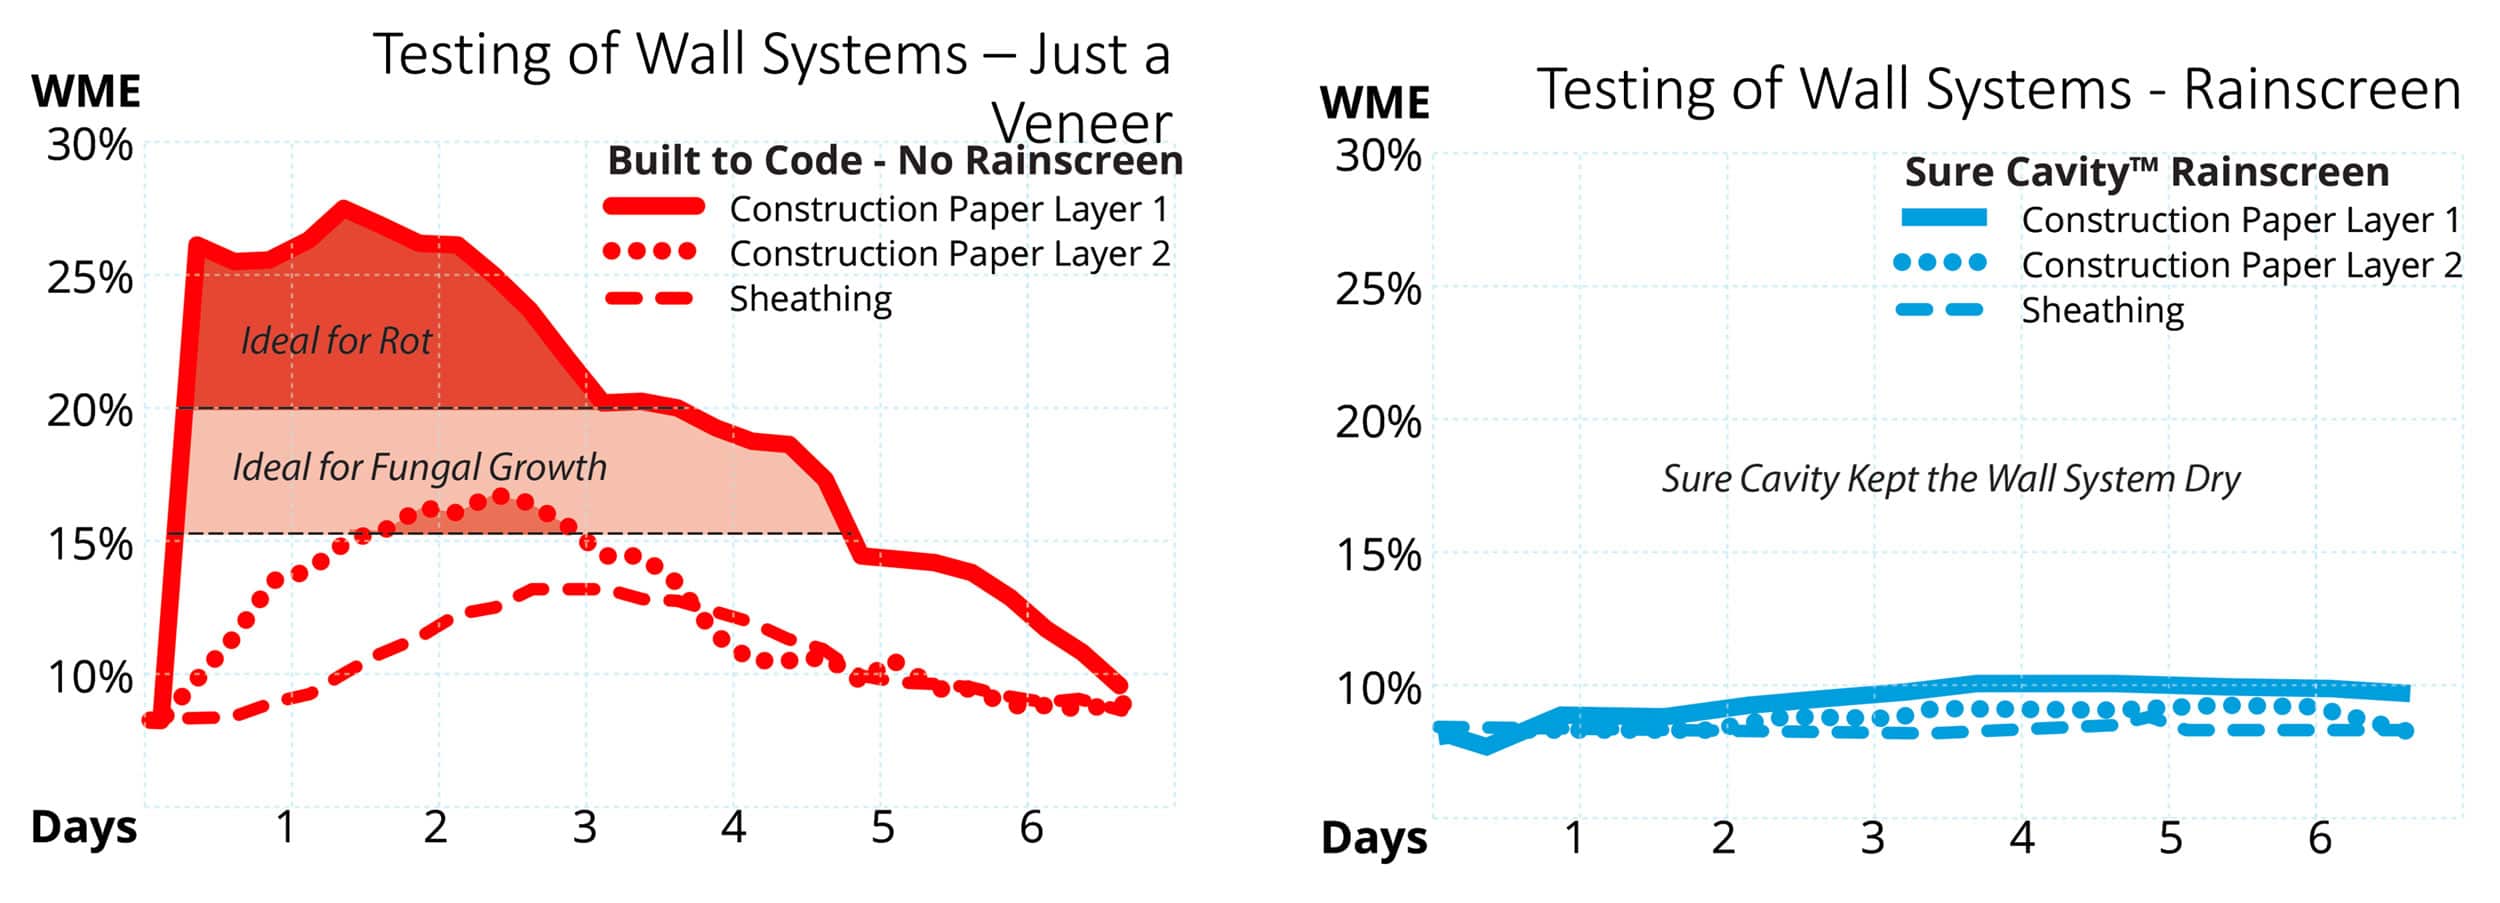 Veneer Stone Wall System Test Results - Code-min vs Rain Screen